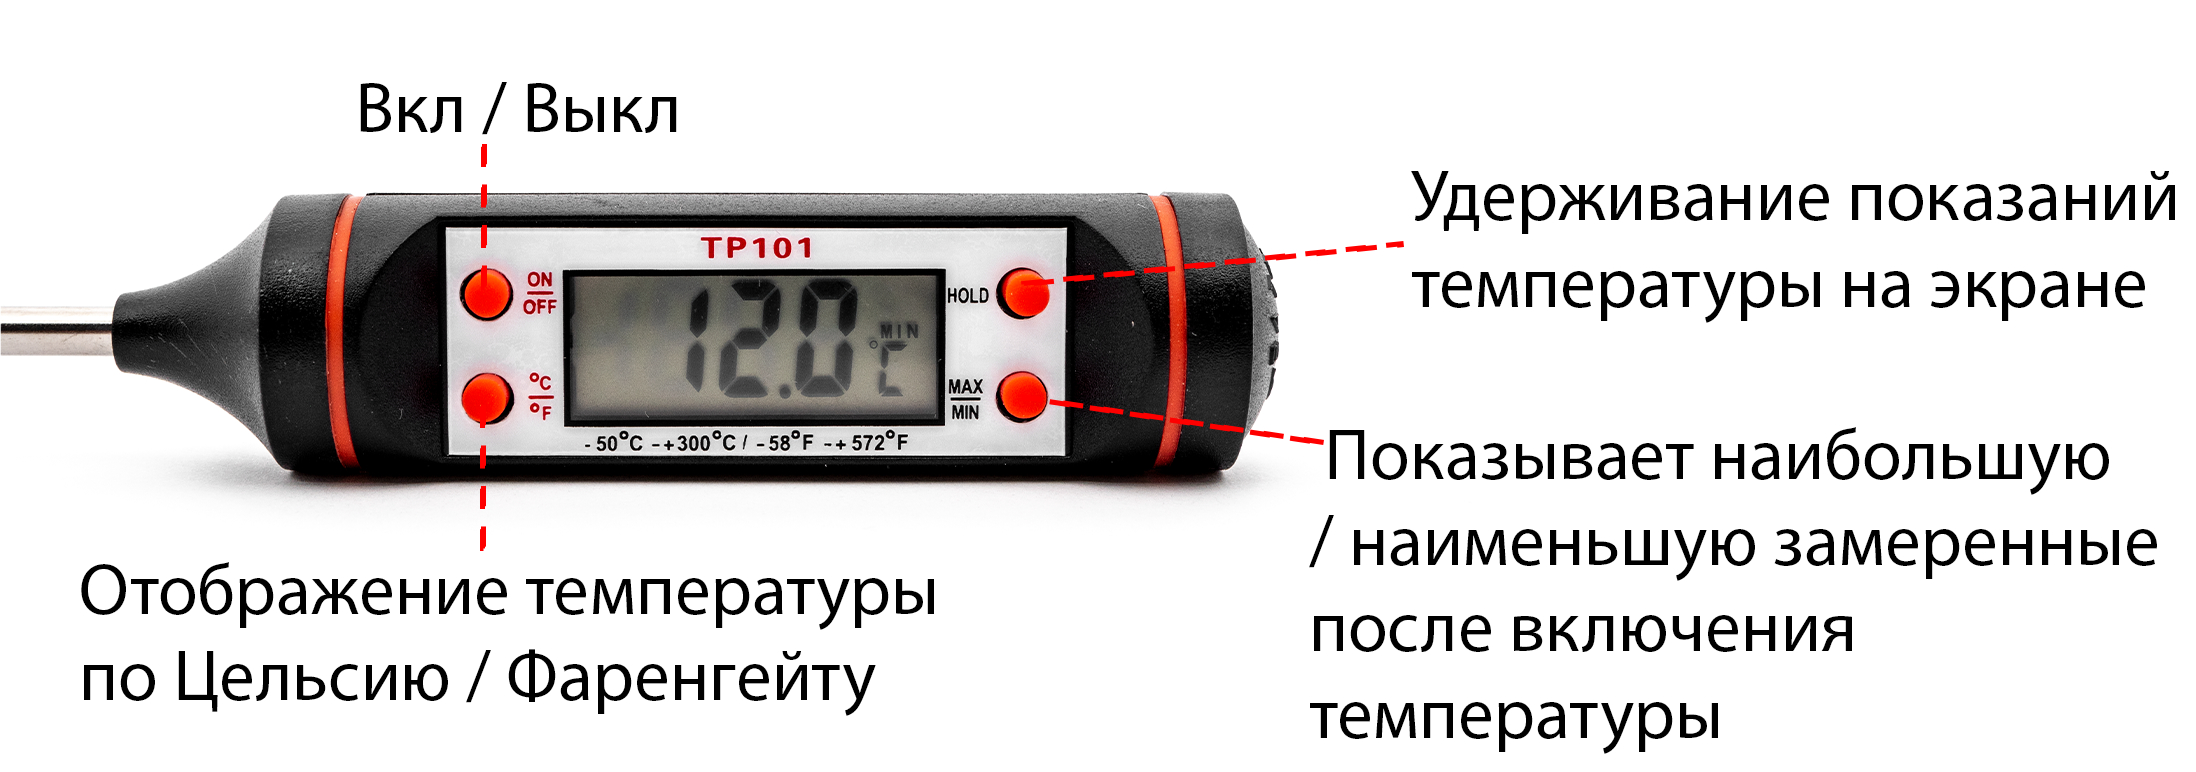 Phasmophobia термометр как работает фото 38